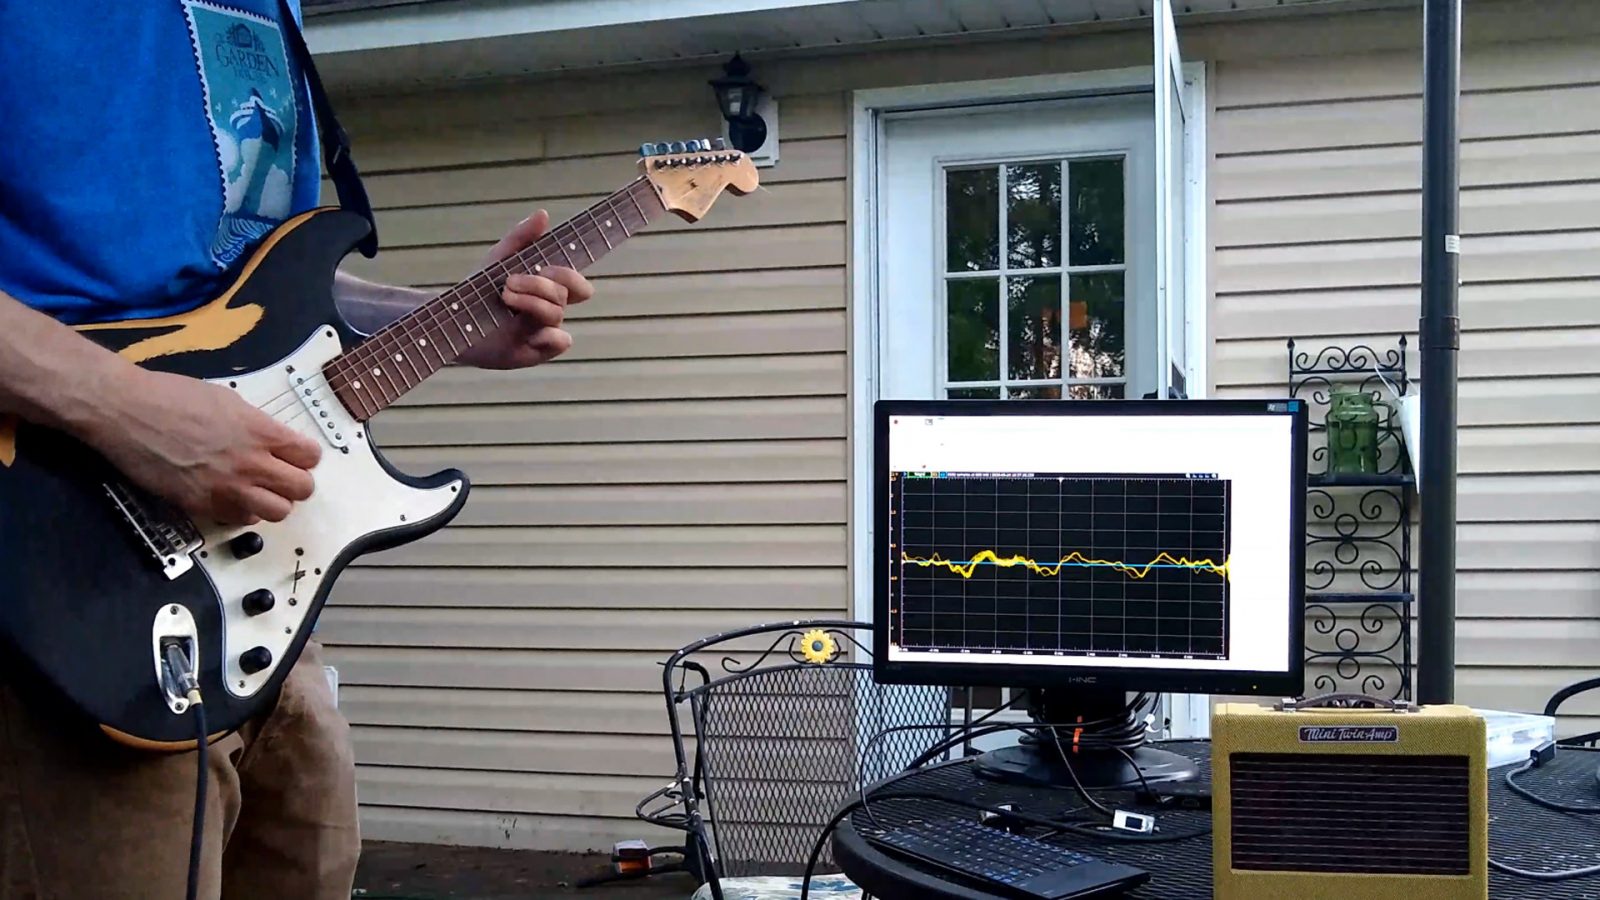 Video: Oscilloscope, Guitars, and Projector